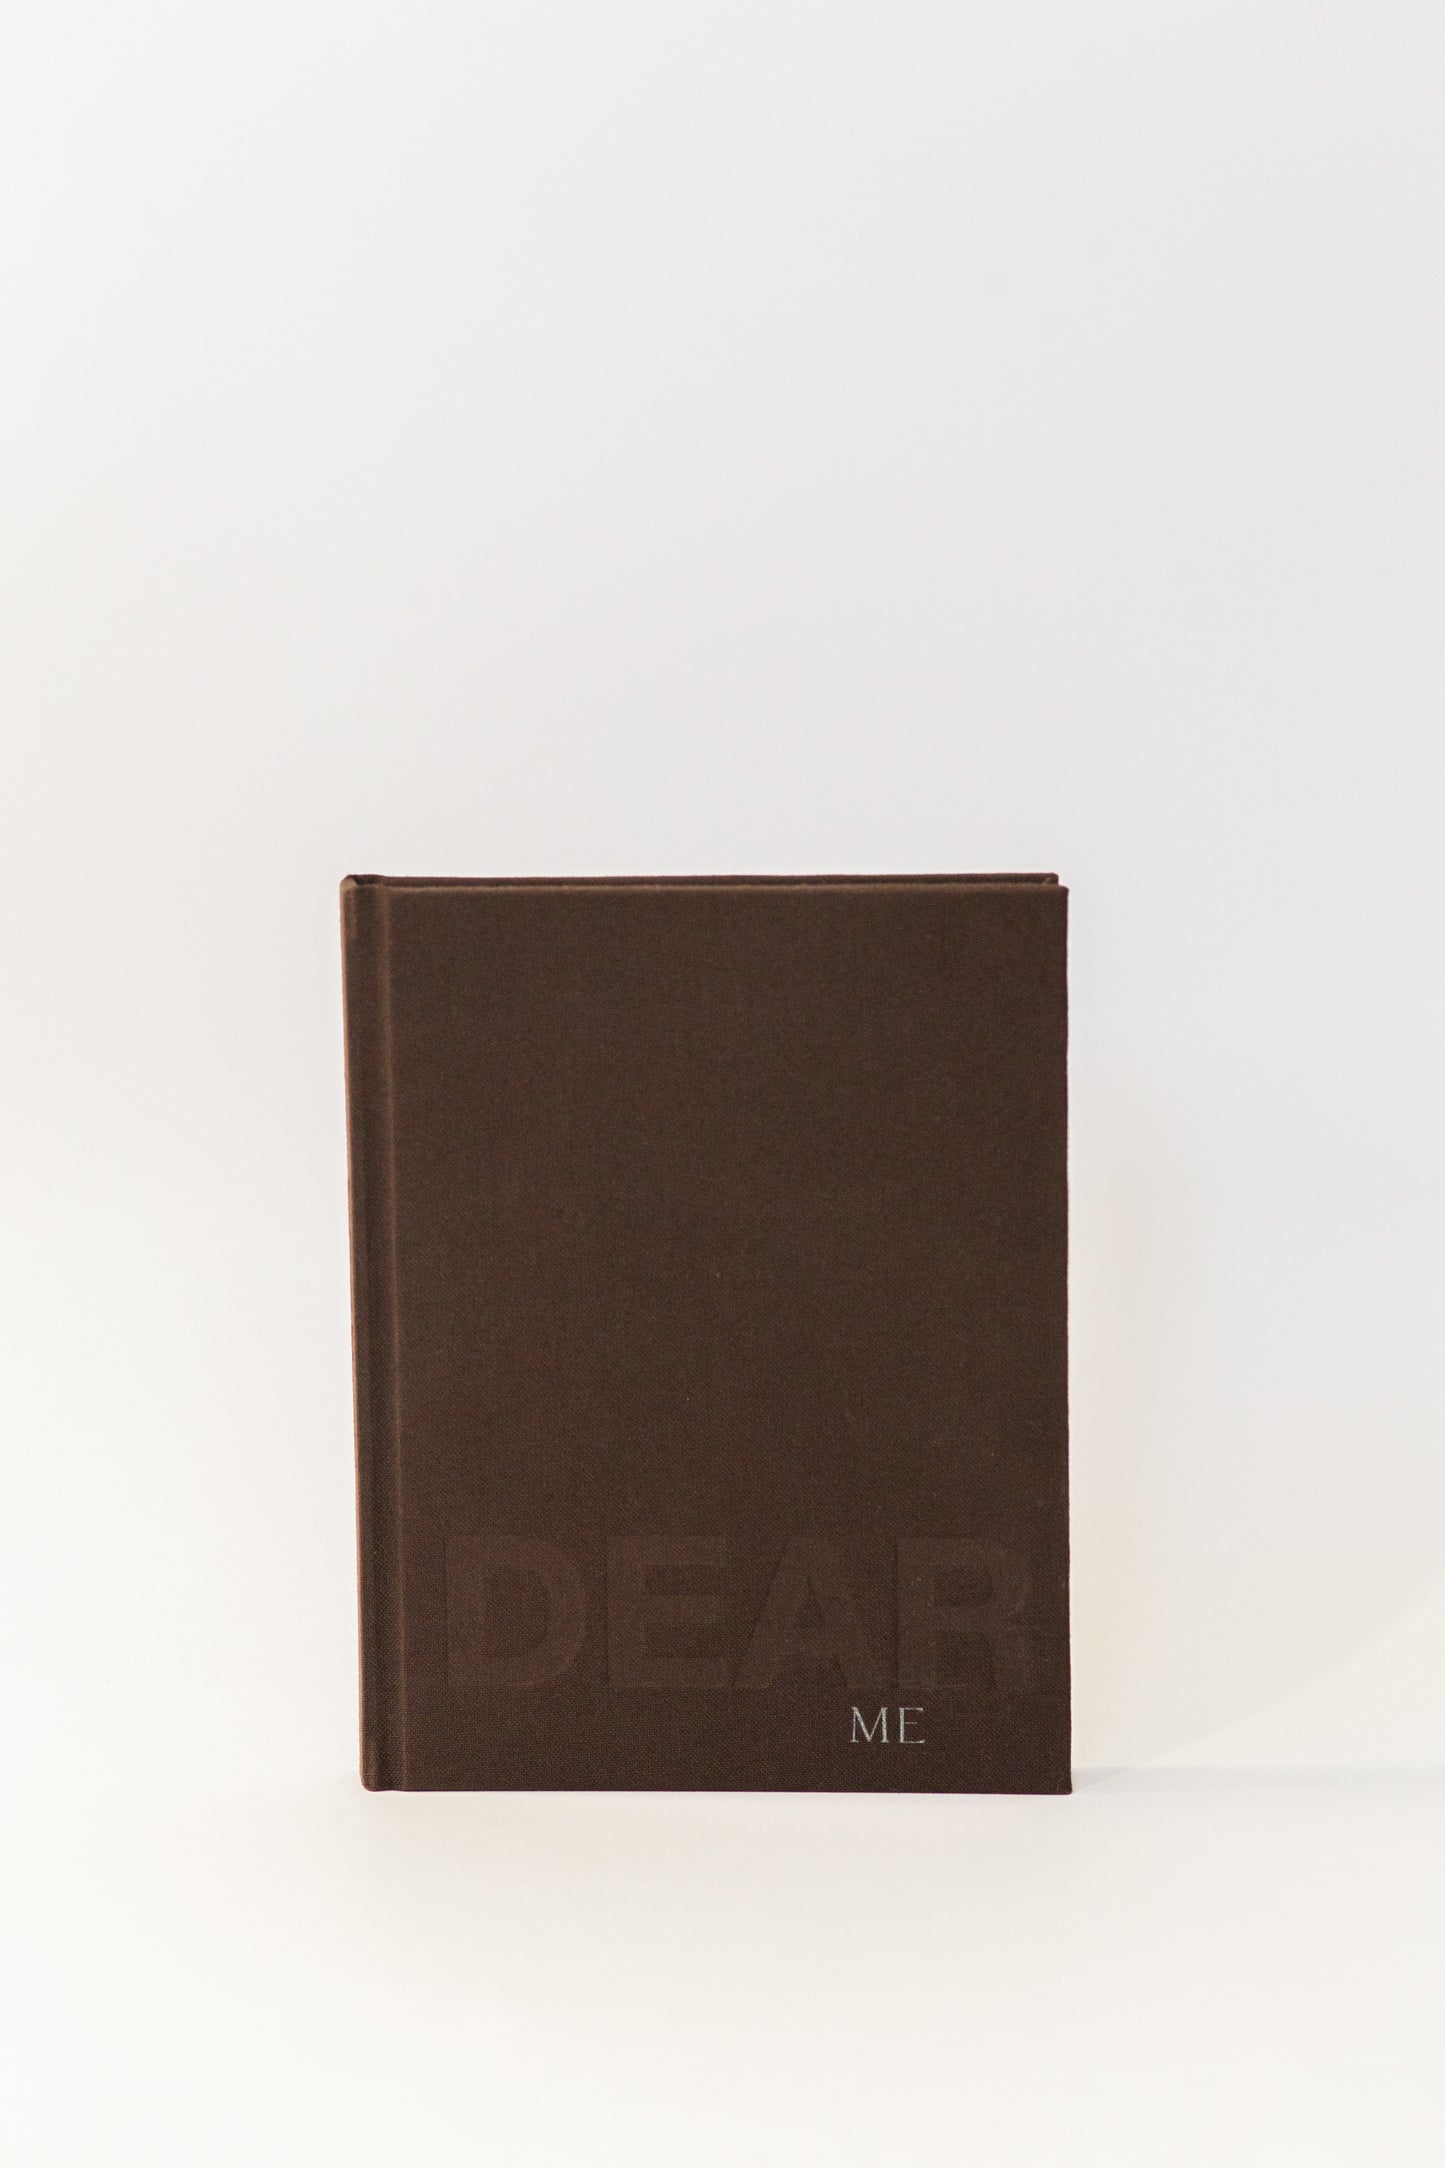 Dear Bundle: Dear Me & Dear Future